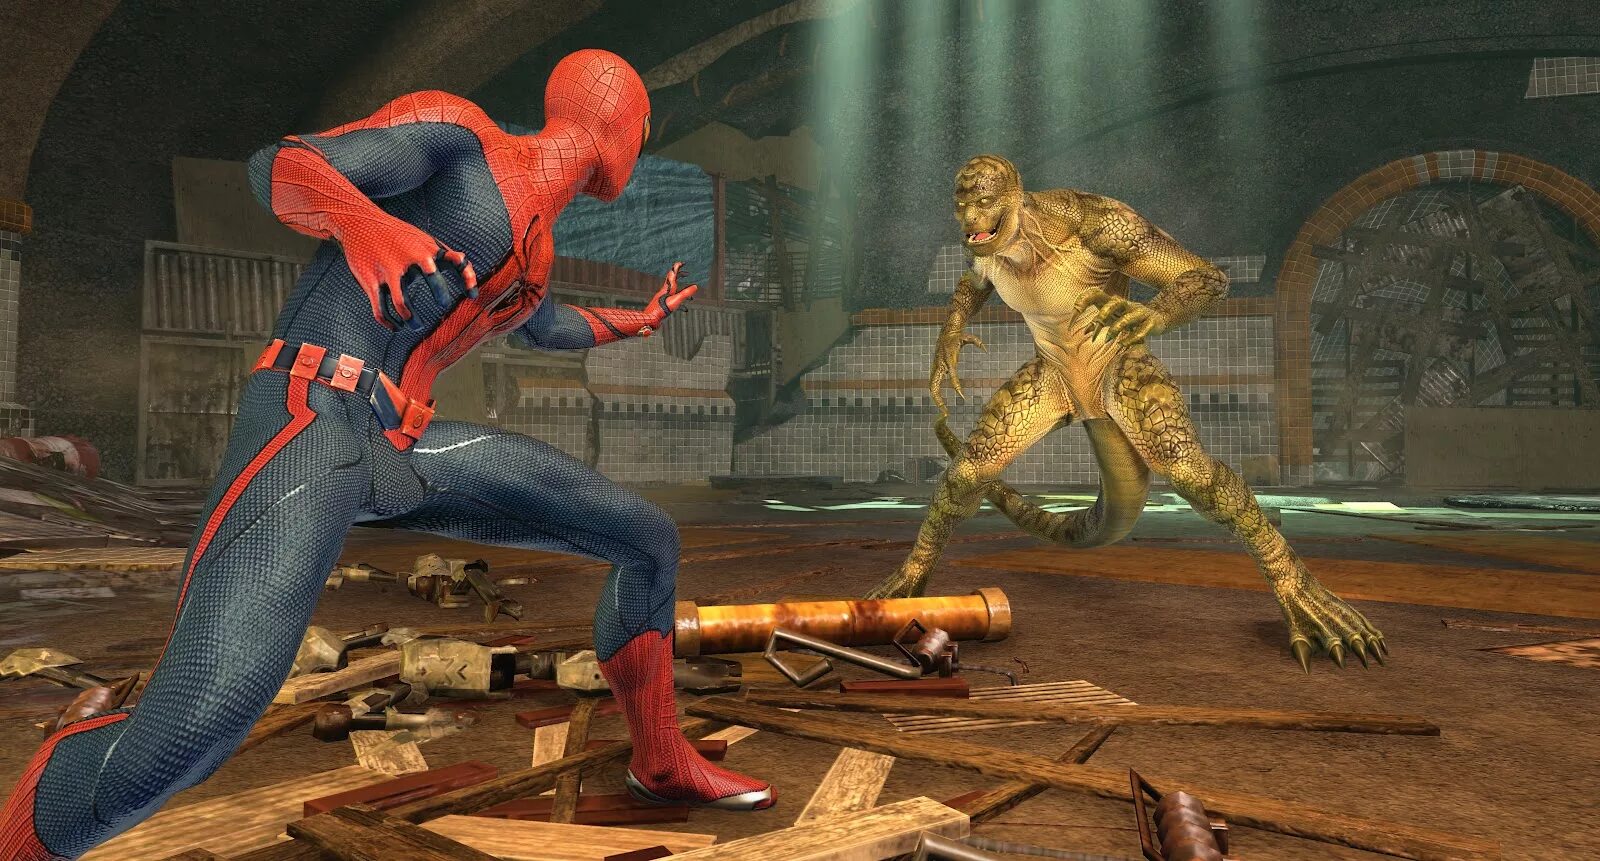 Spider man 2 ящер. Spider-man (игра, 2000). Скорпион человек паук игра. Amazing Spider man игра ящер.